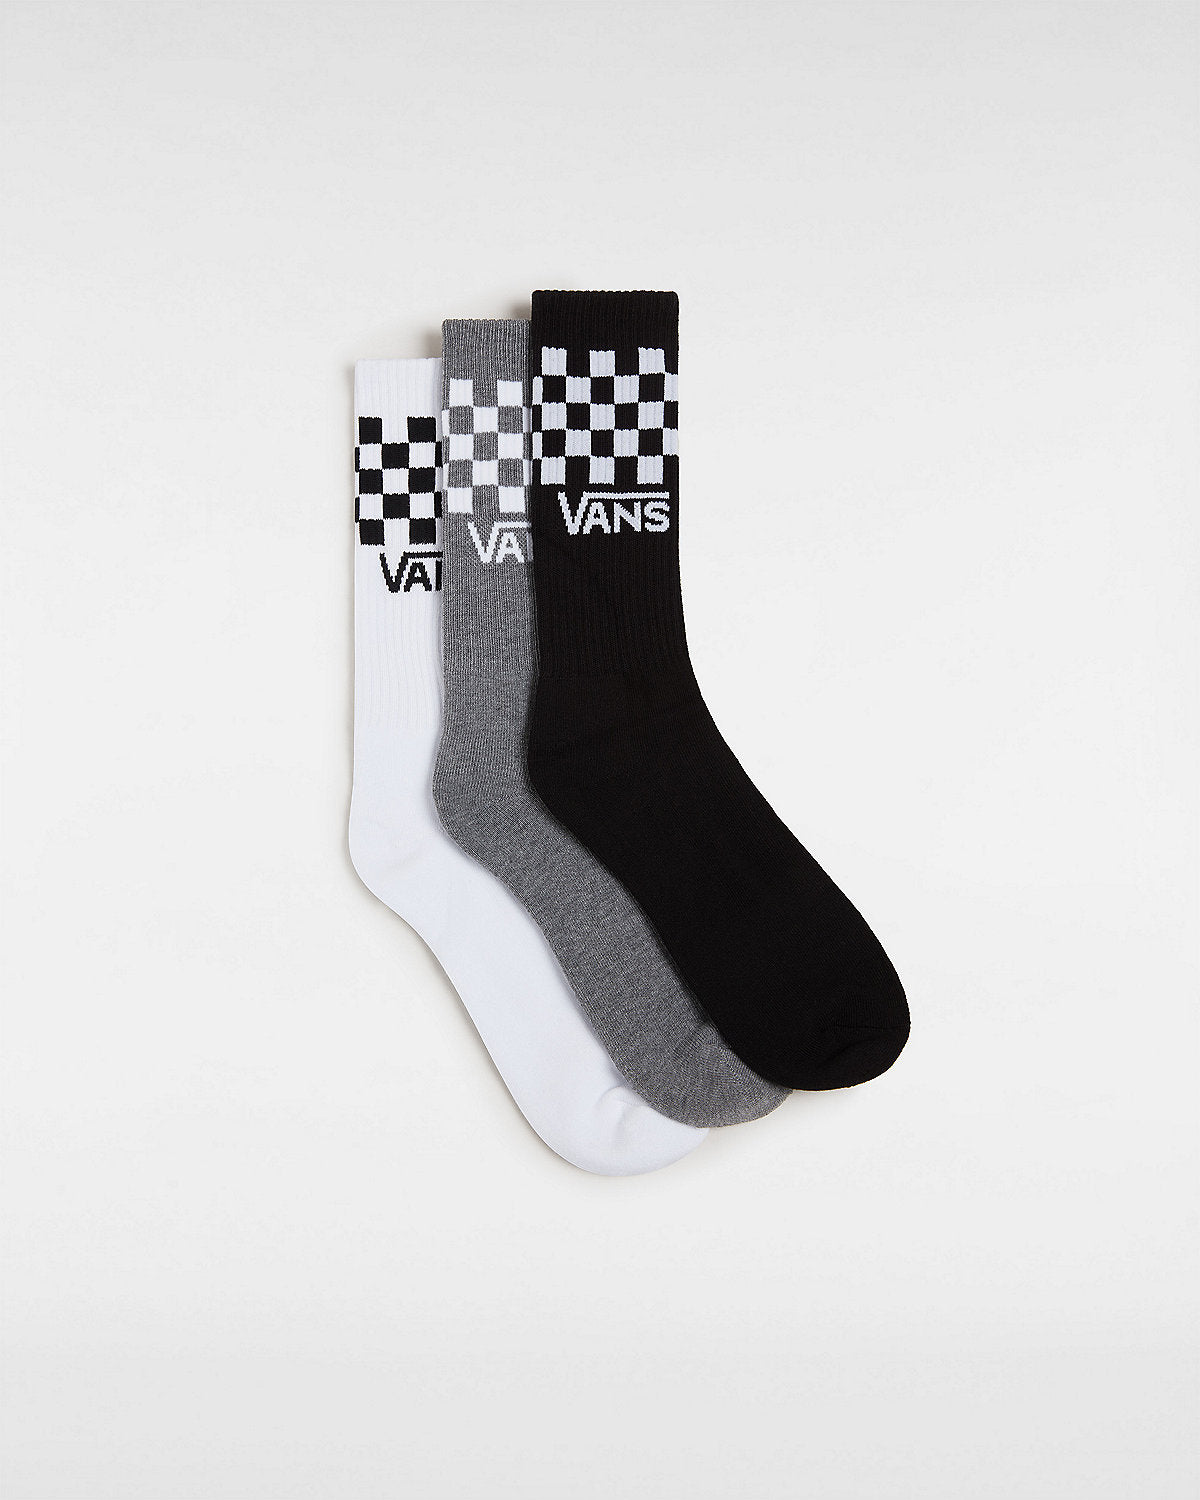 VANS Mens Classic Check Crew Socks (3 Pairs) - Black / White